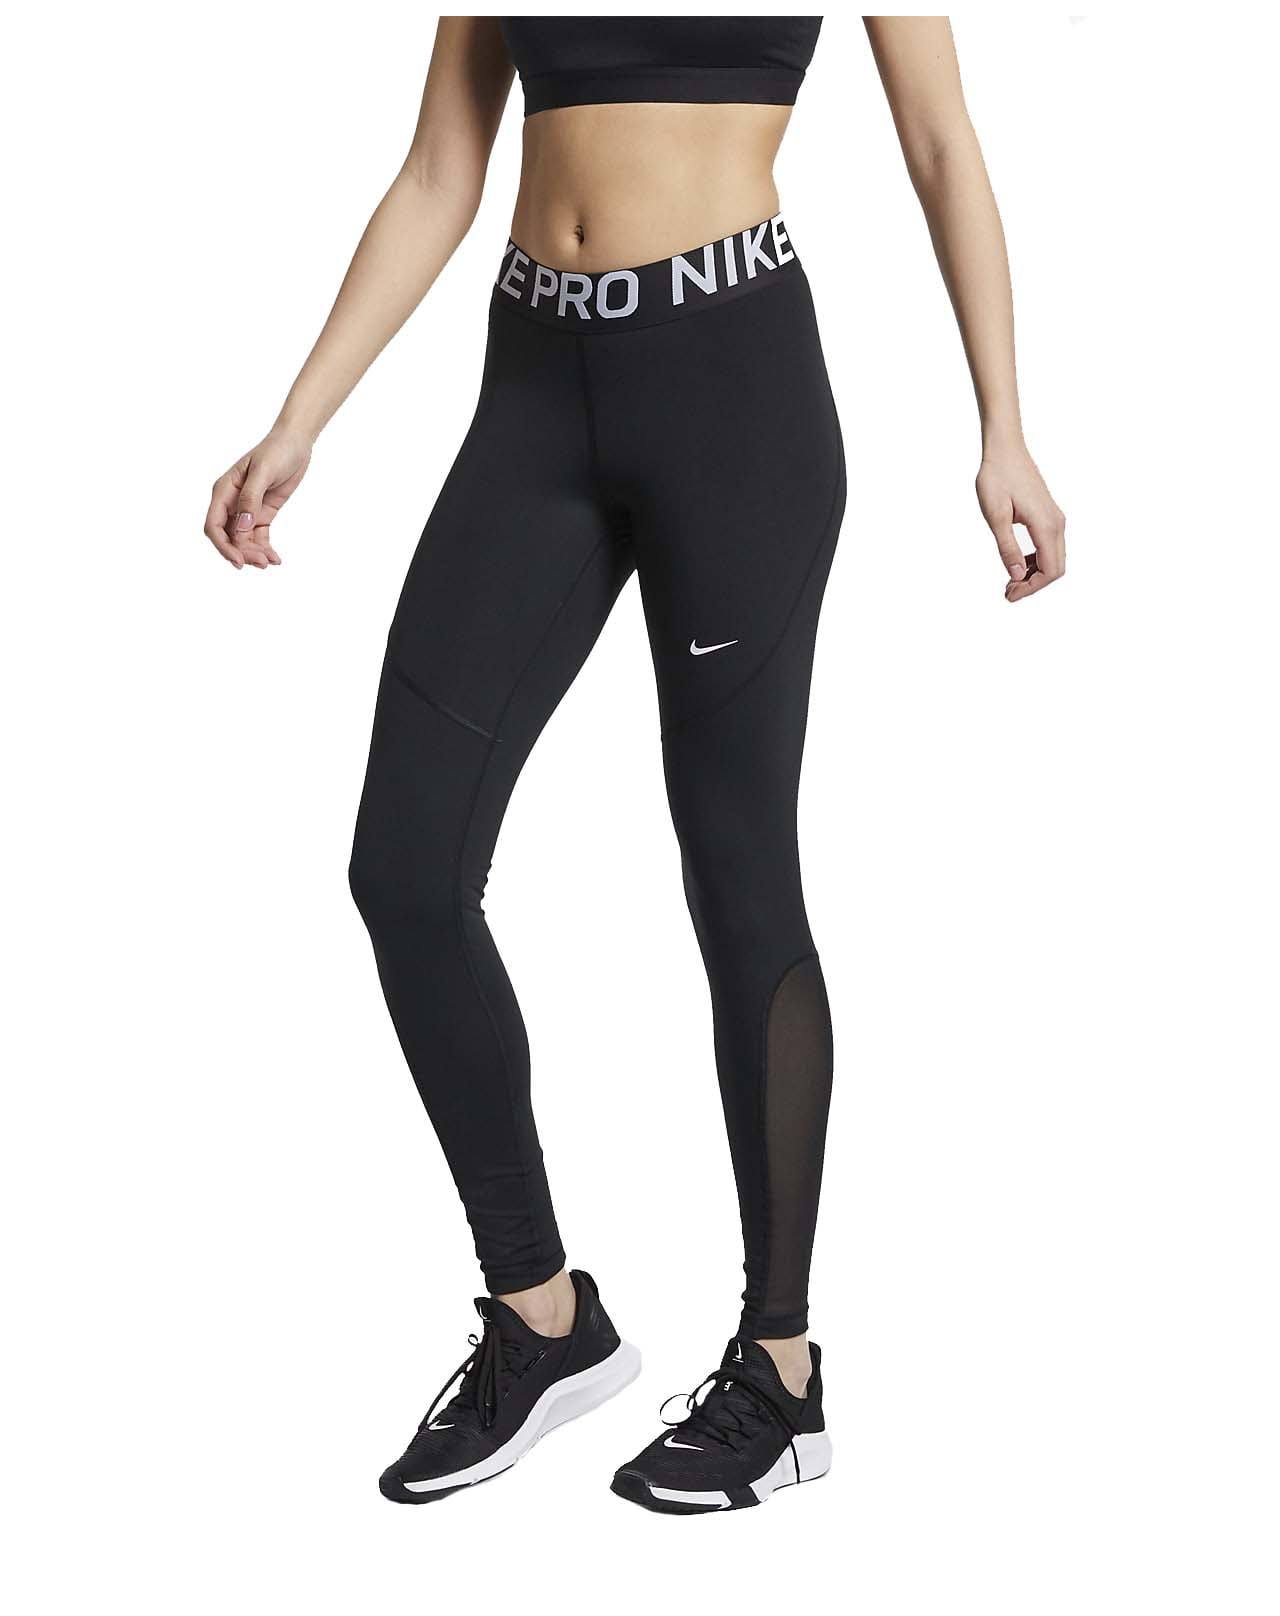 Nike Women's Dri-Fit Pro Tight Fit Training Pants (Black, Small)